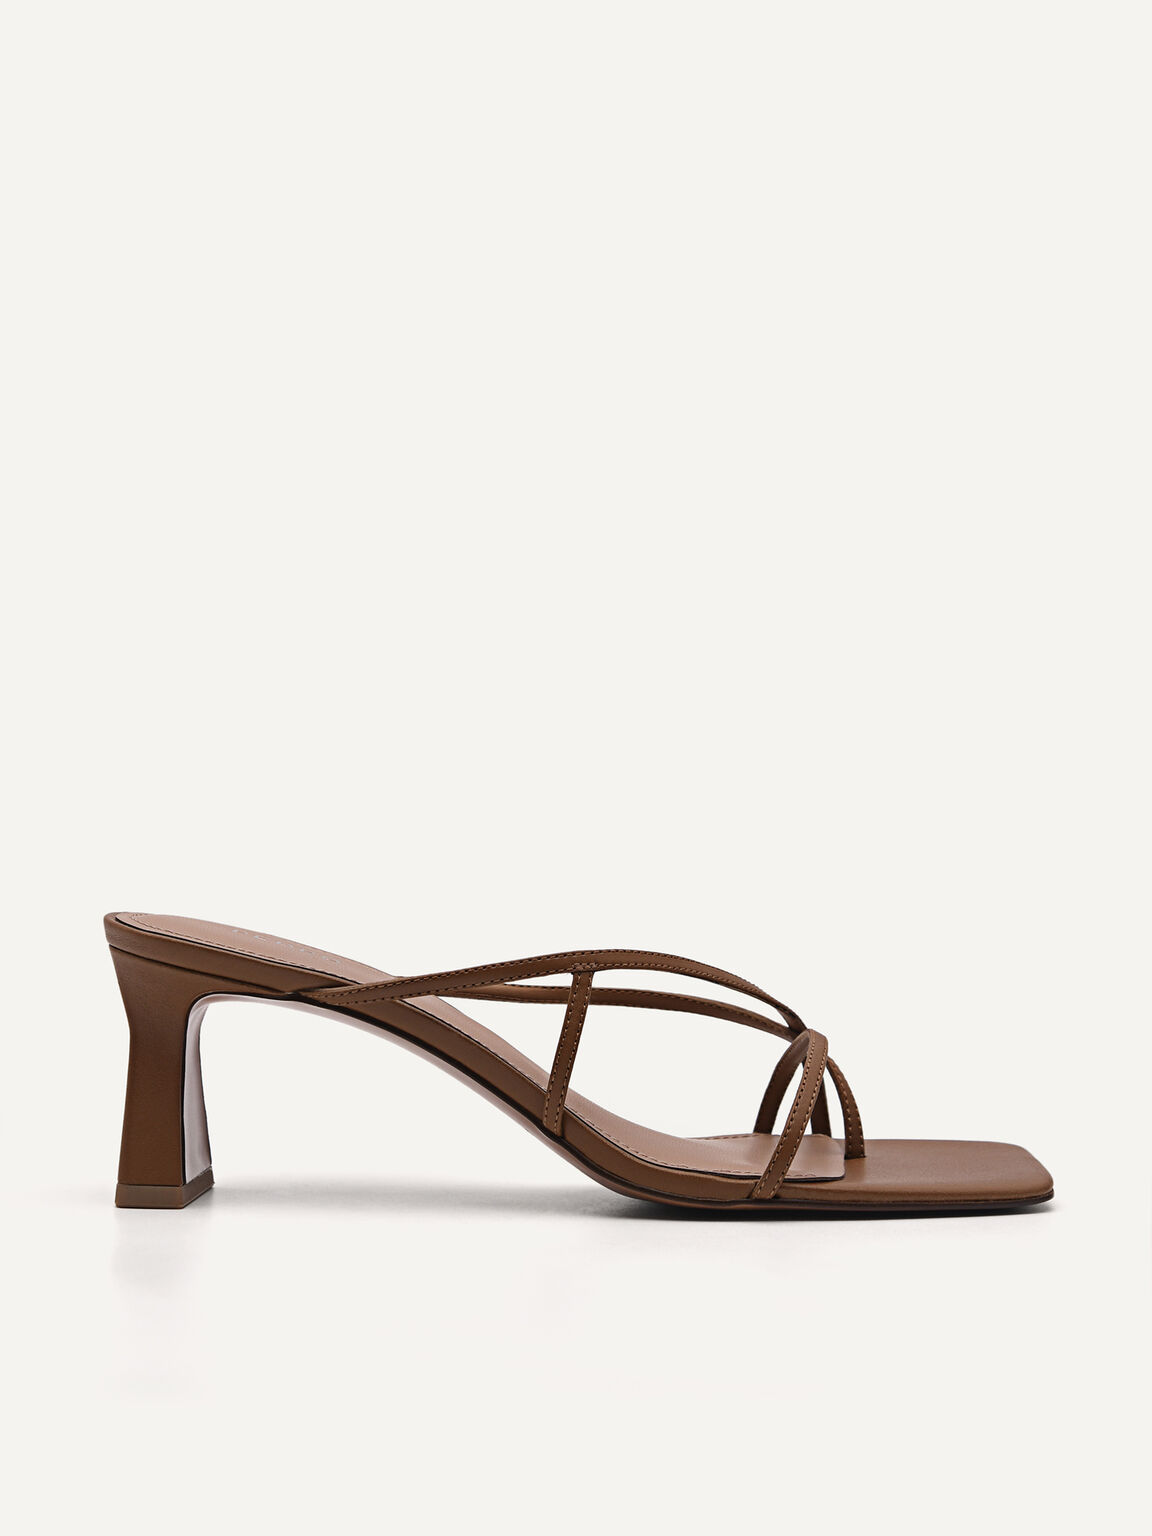 Sandals, Brown